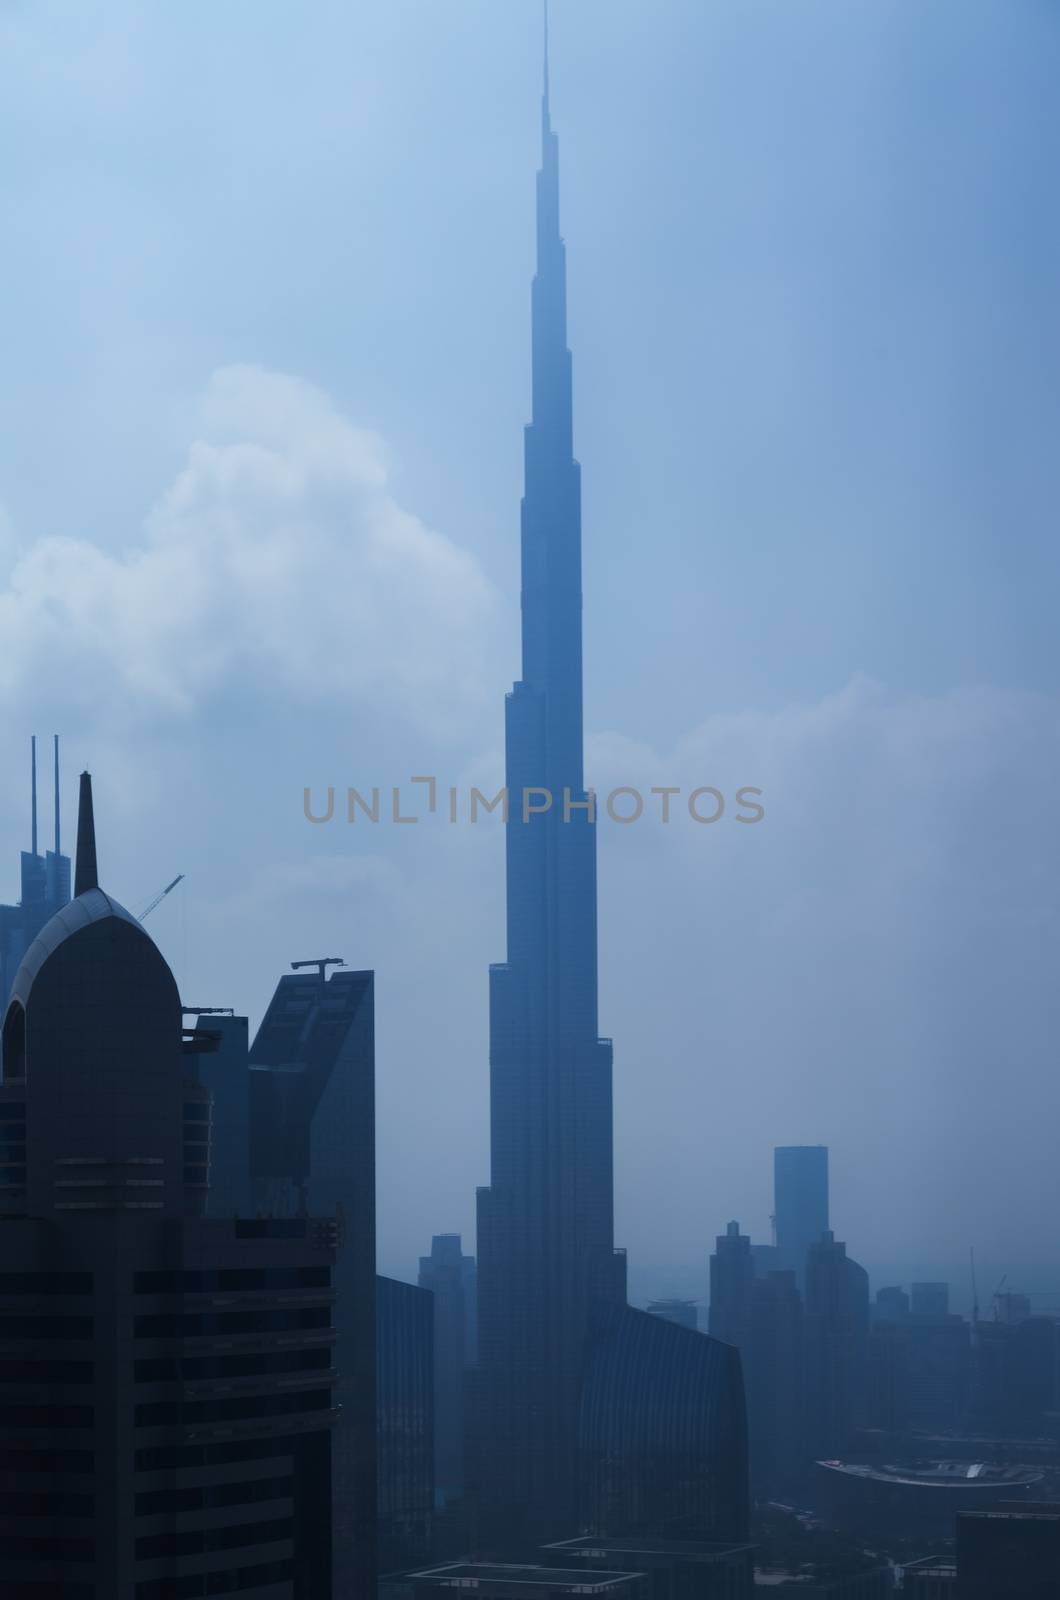 DUBAI, UAE - JANUARY 23, 2016: Vertical night panorama of Burj Khalifa tallest building in the world 829.8 m. Dubai Burj Khalifa, United Arab Emirates